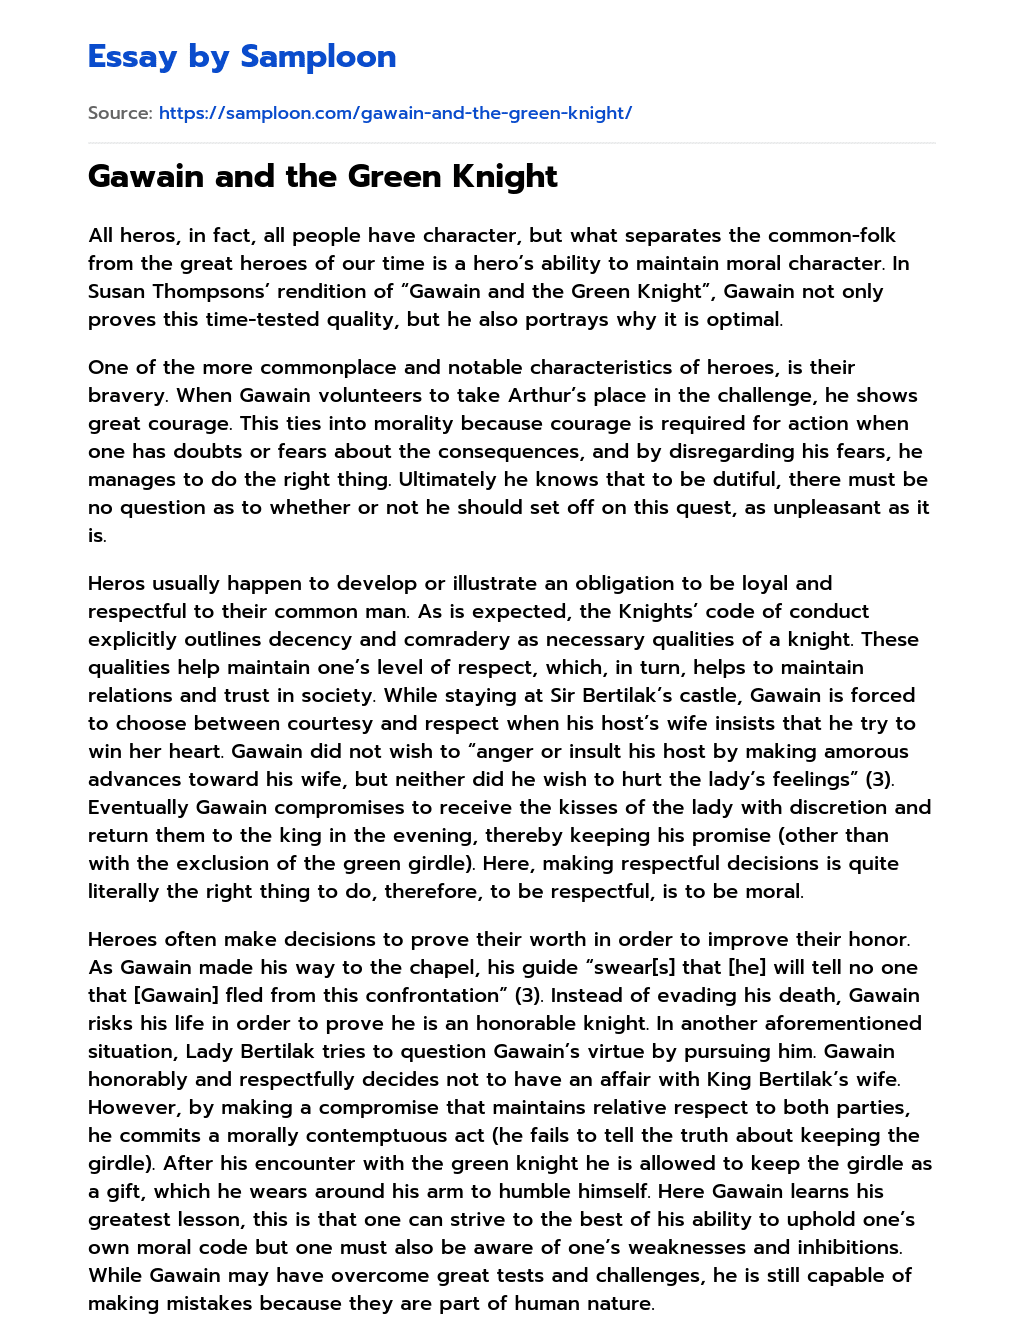 Gawain and the Green Knight essay